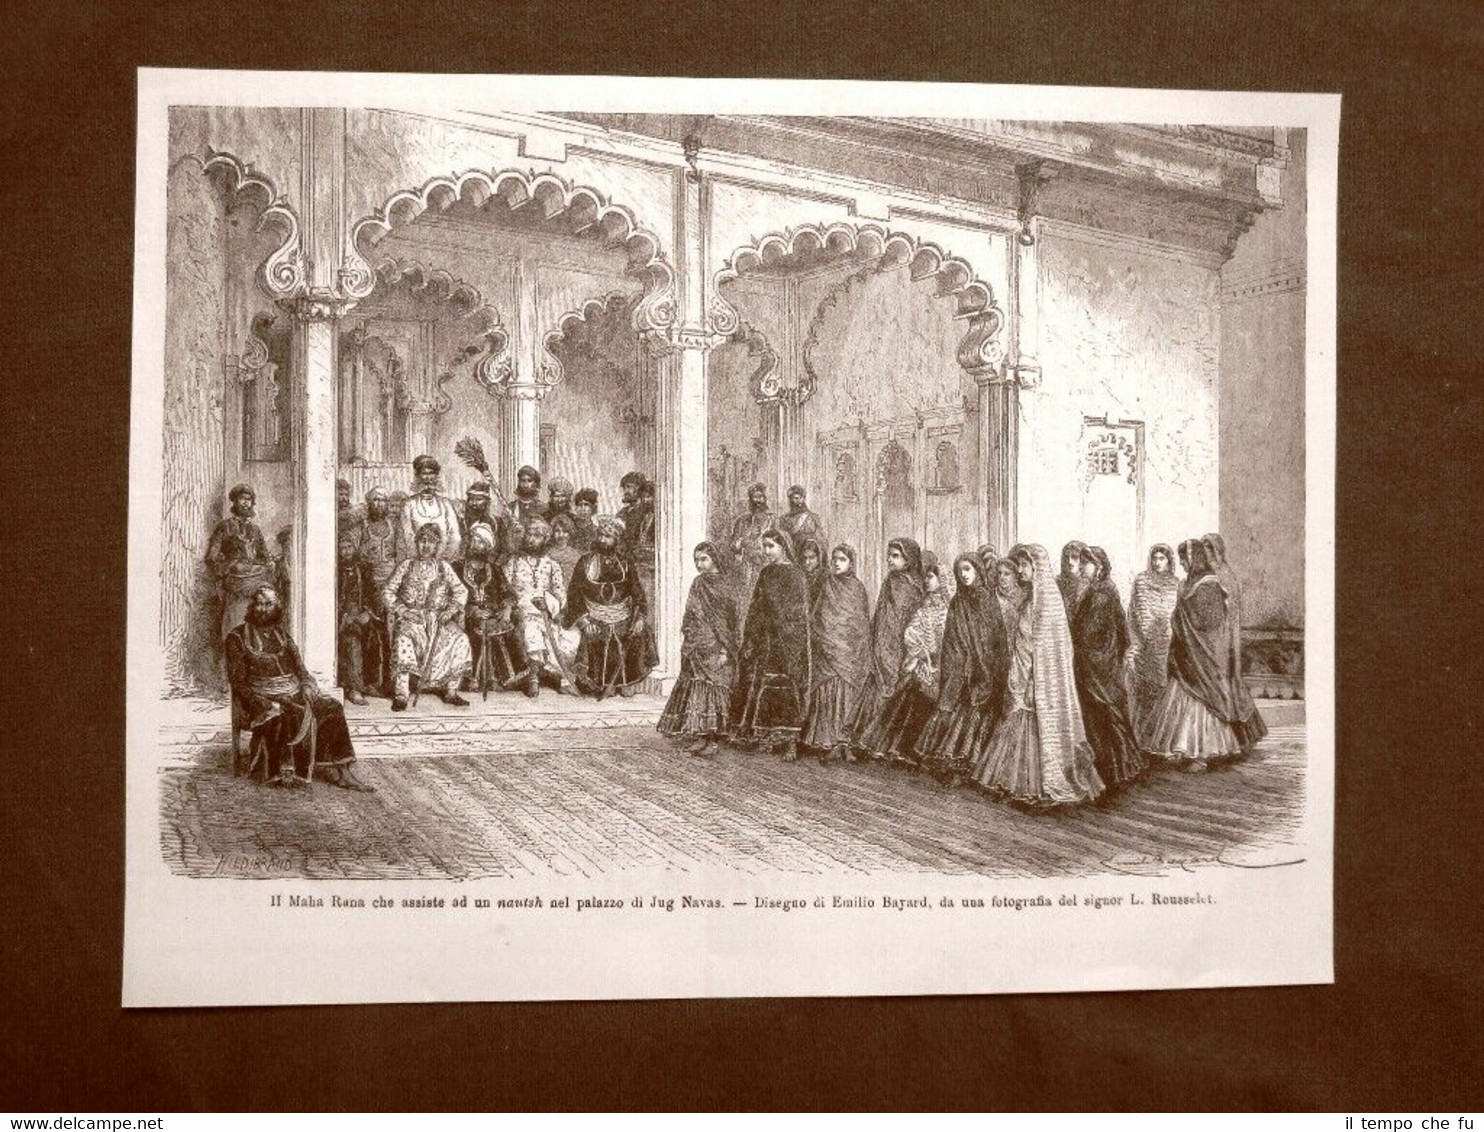 Nel Palazzo di Jug Navas nel 1863 Il Maha Rana …